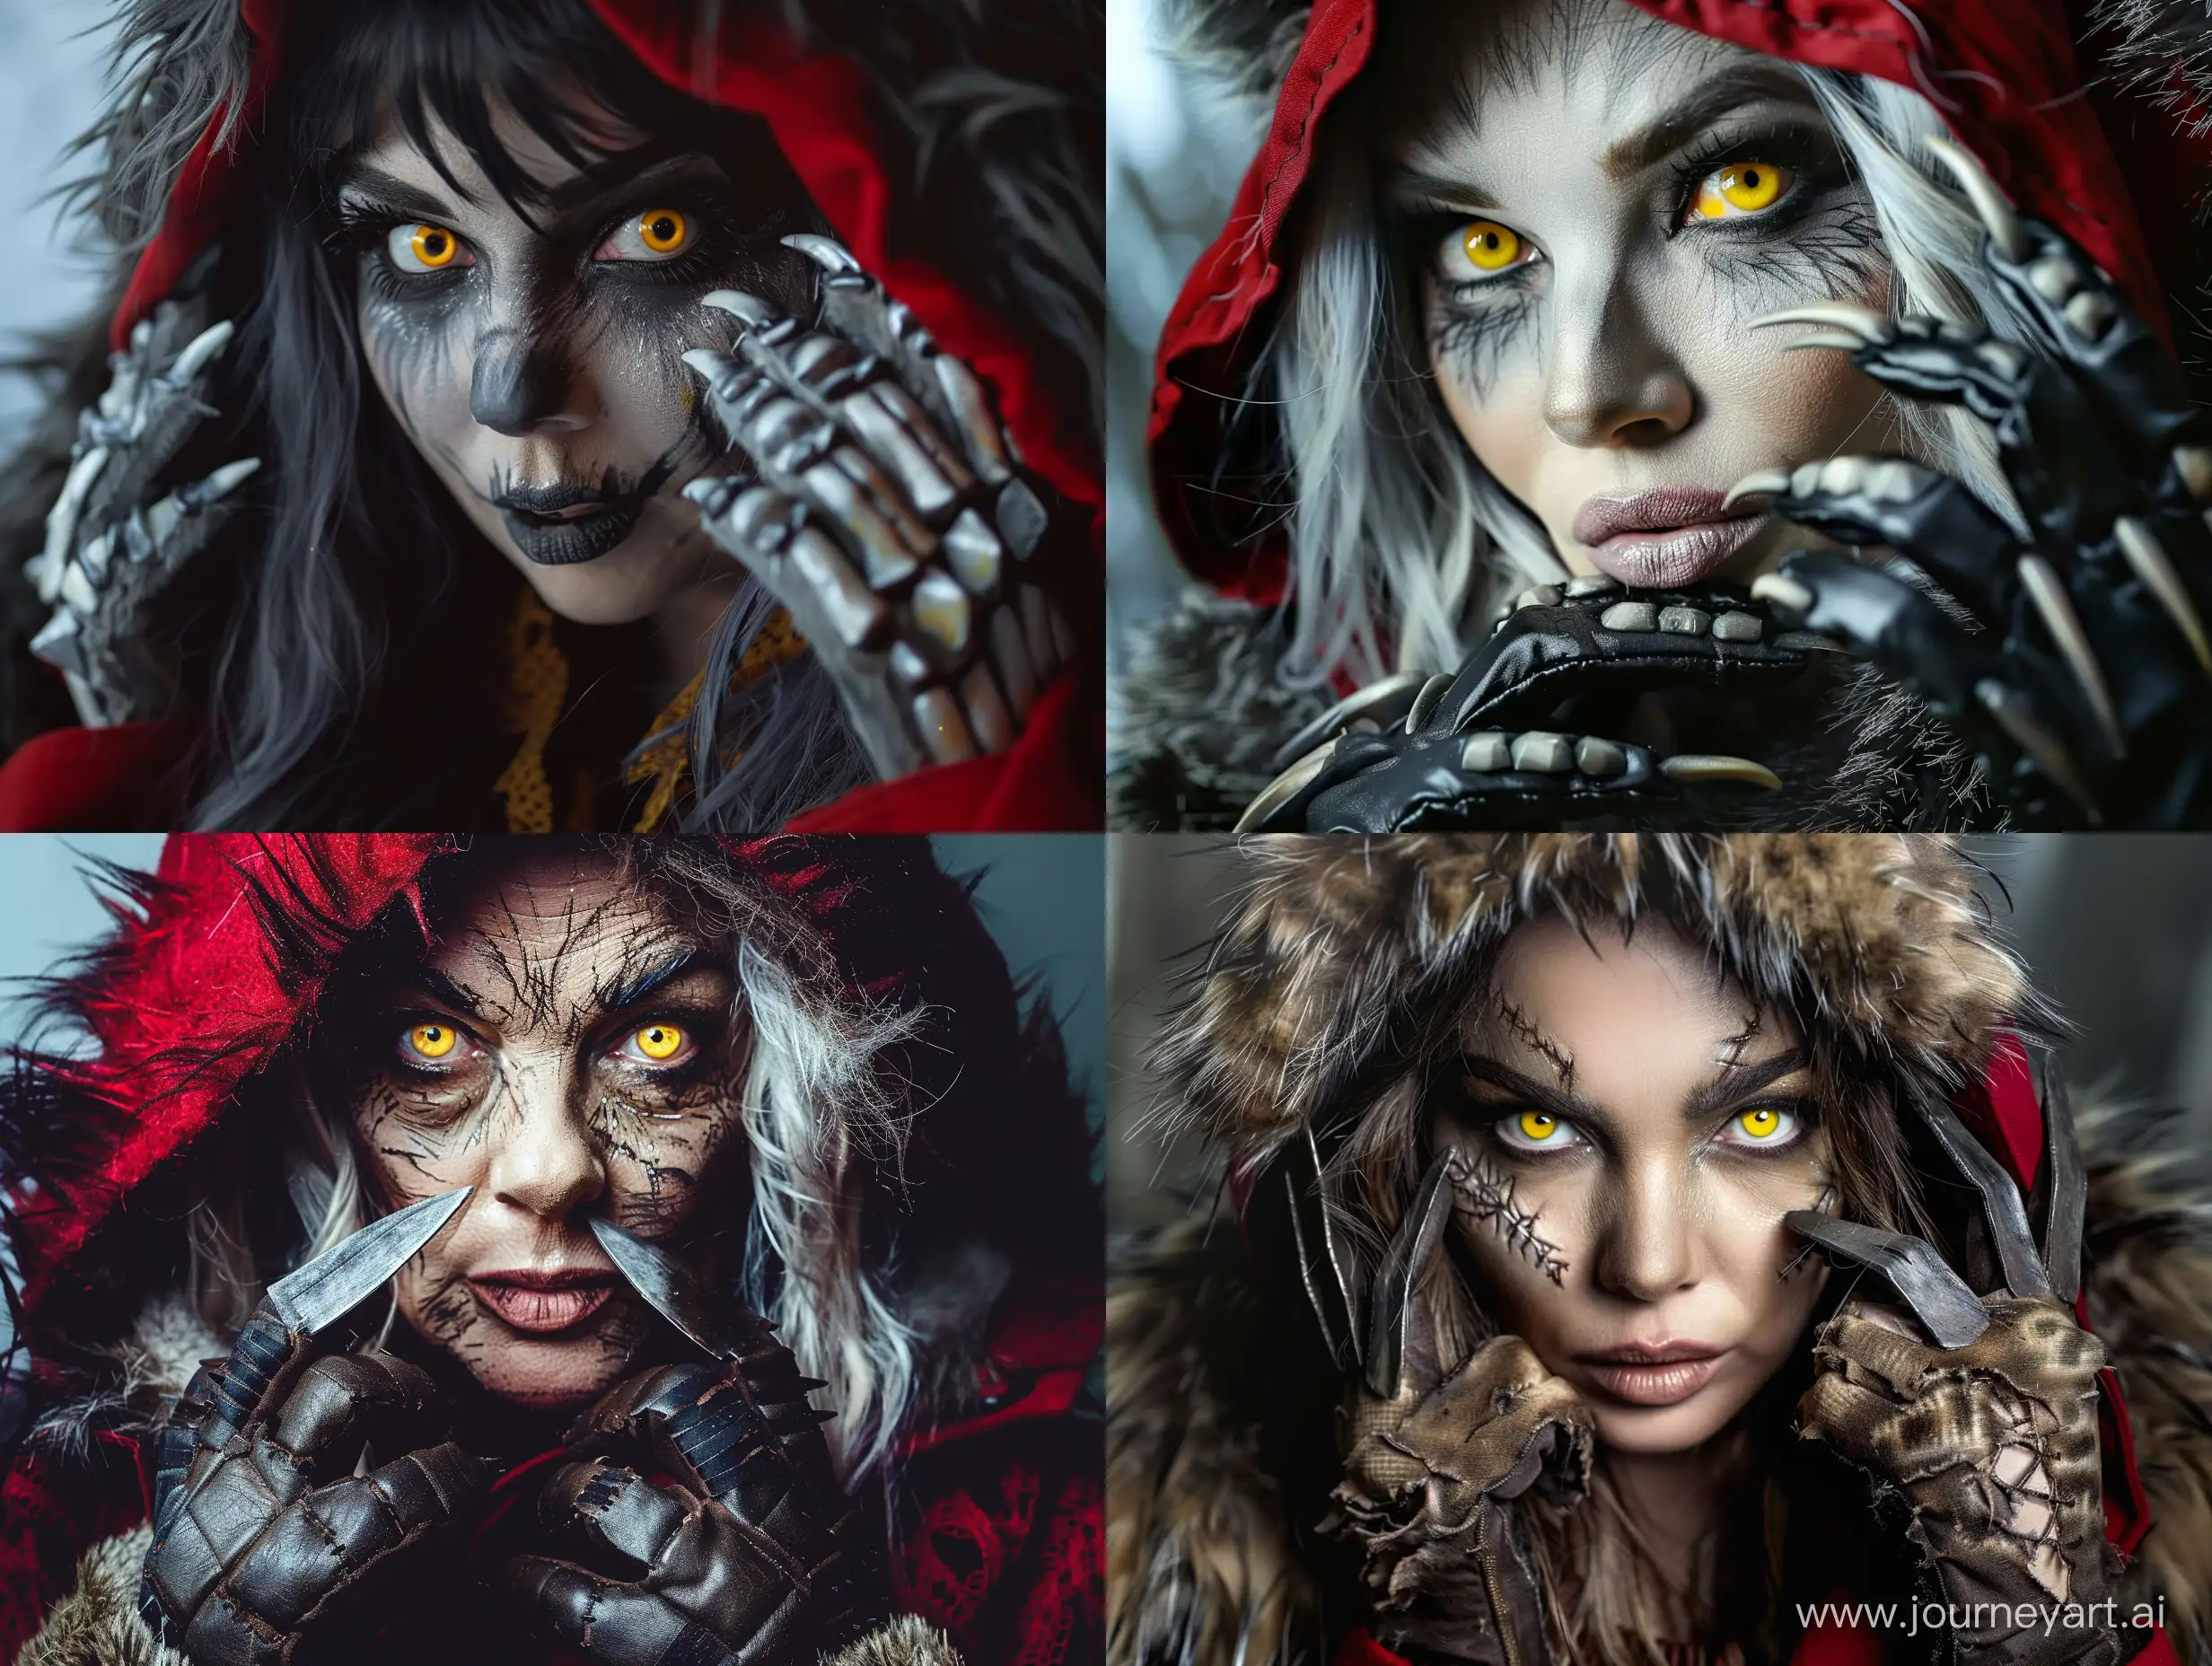 Kelly-Osbourne-Gothic-Werewolf-Transformation-in-Red-Riding-Hood-Costume